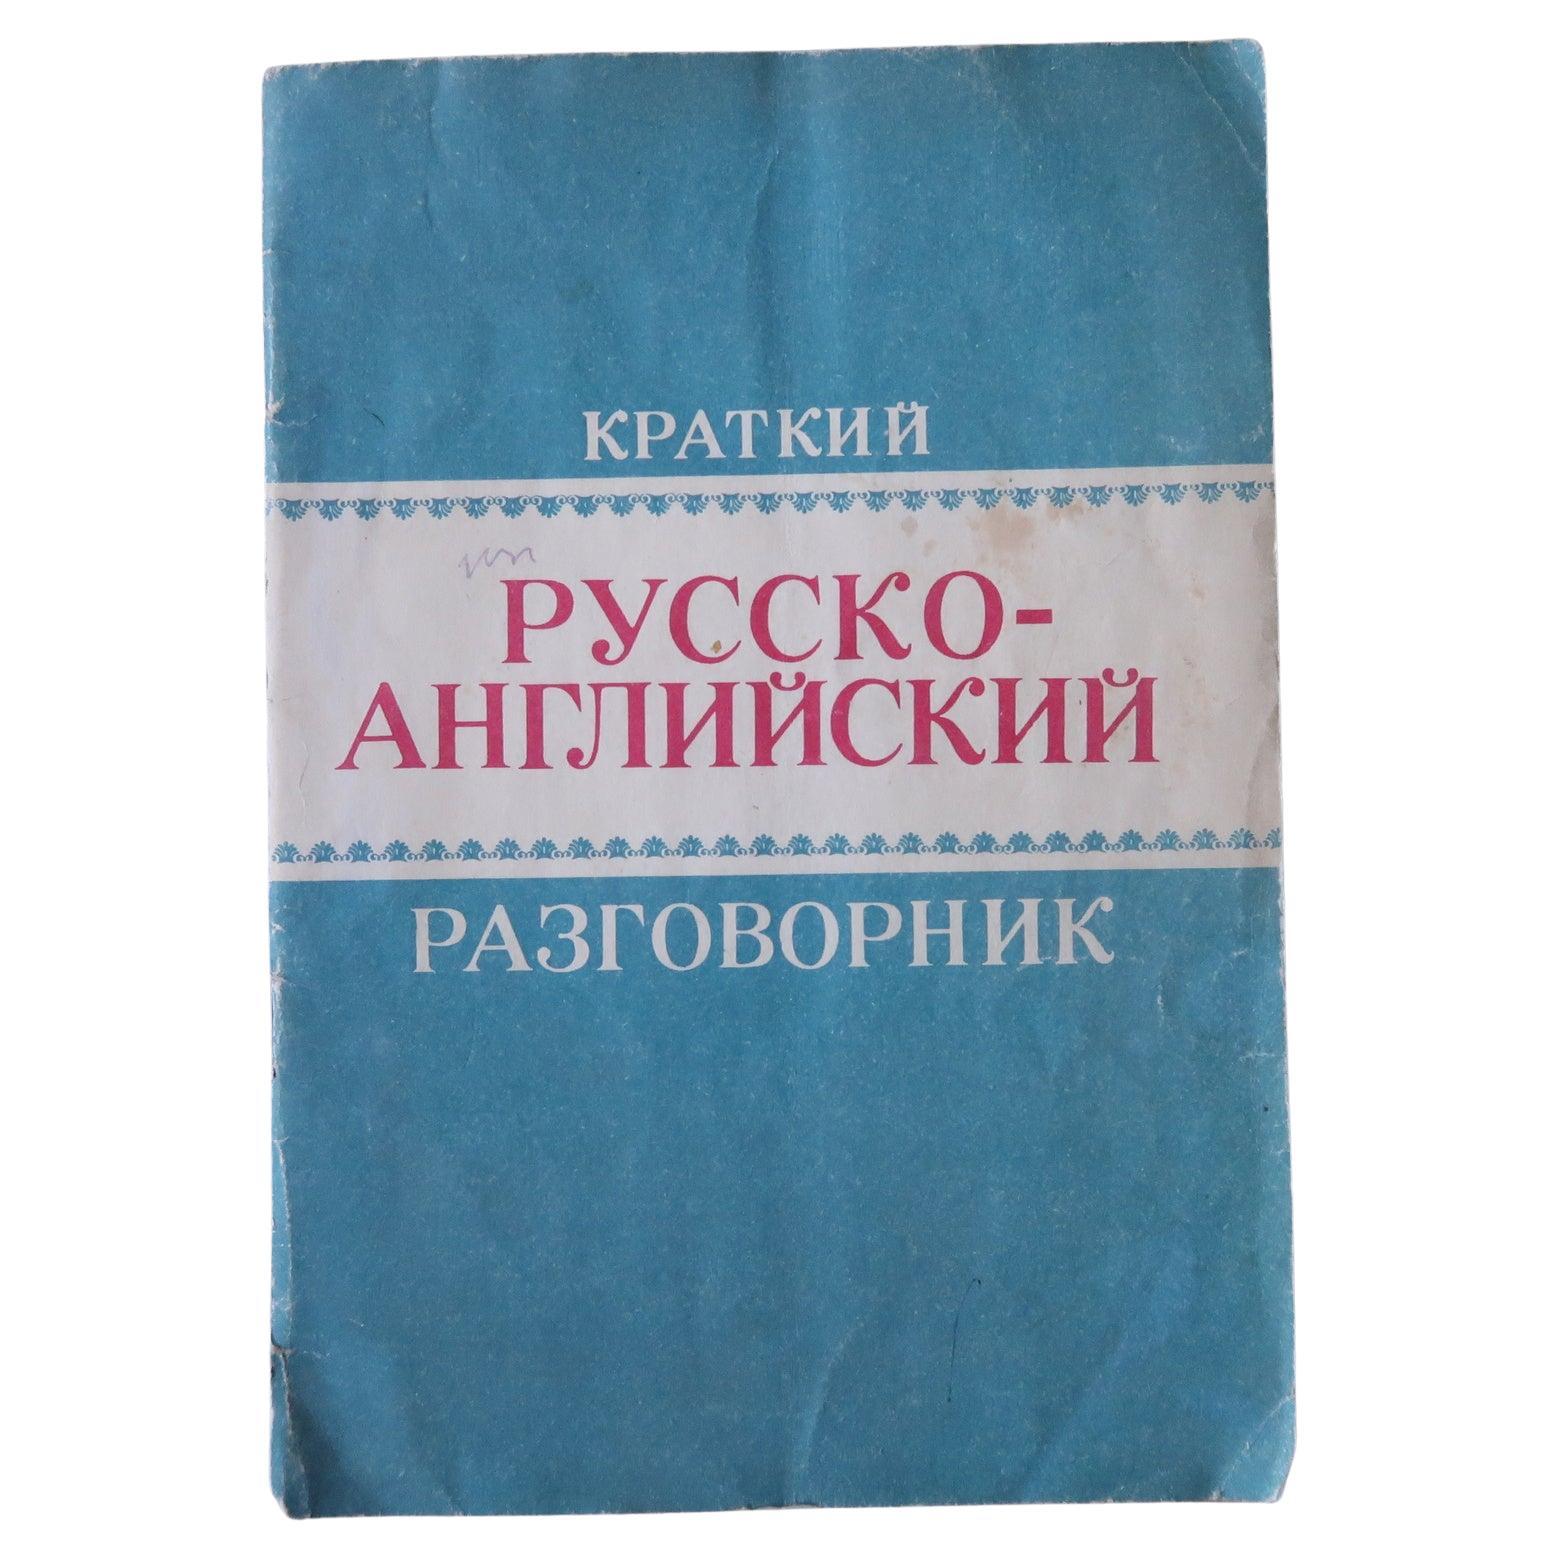 Vintage Language Companion: Brief Russian-English Phrasebook, 1990, USSR, 1J142